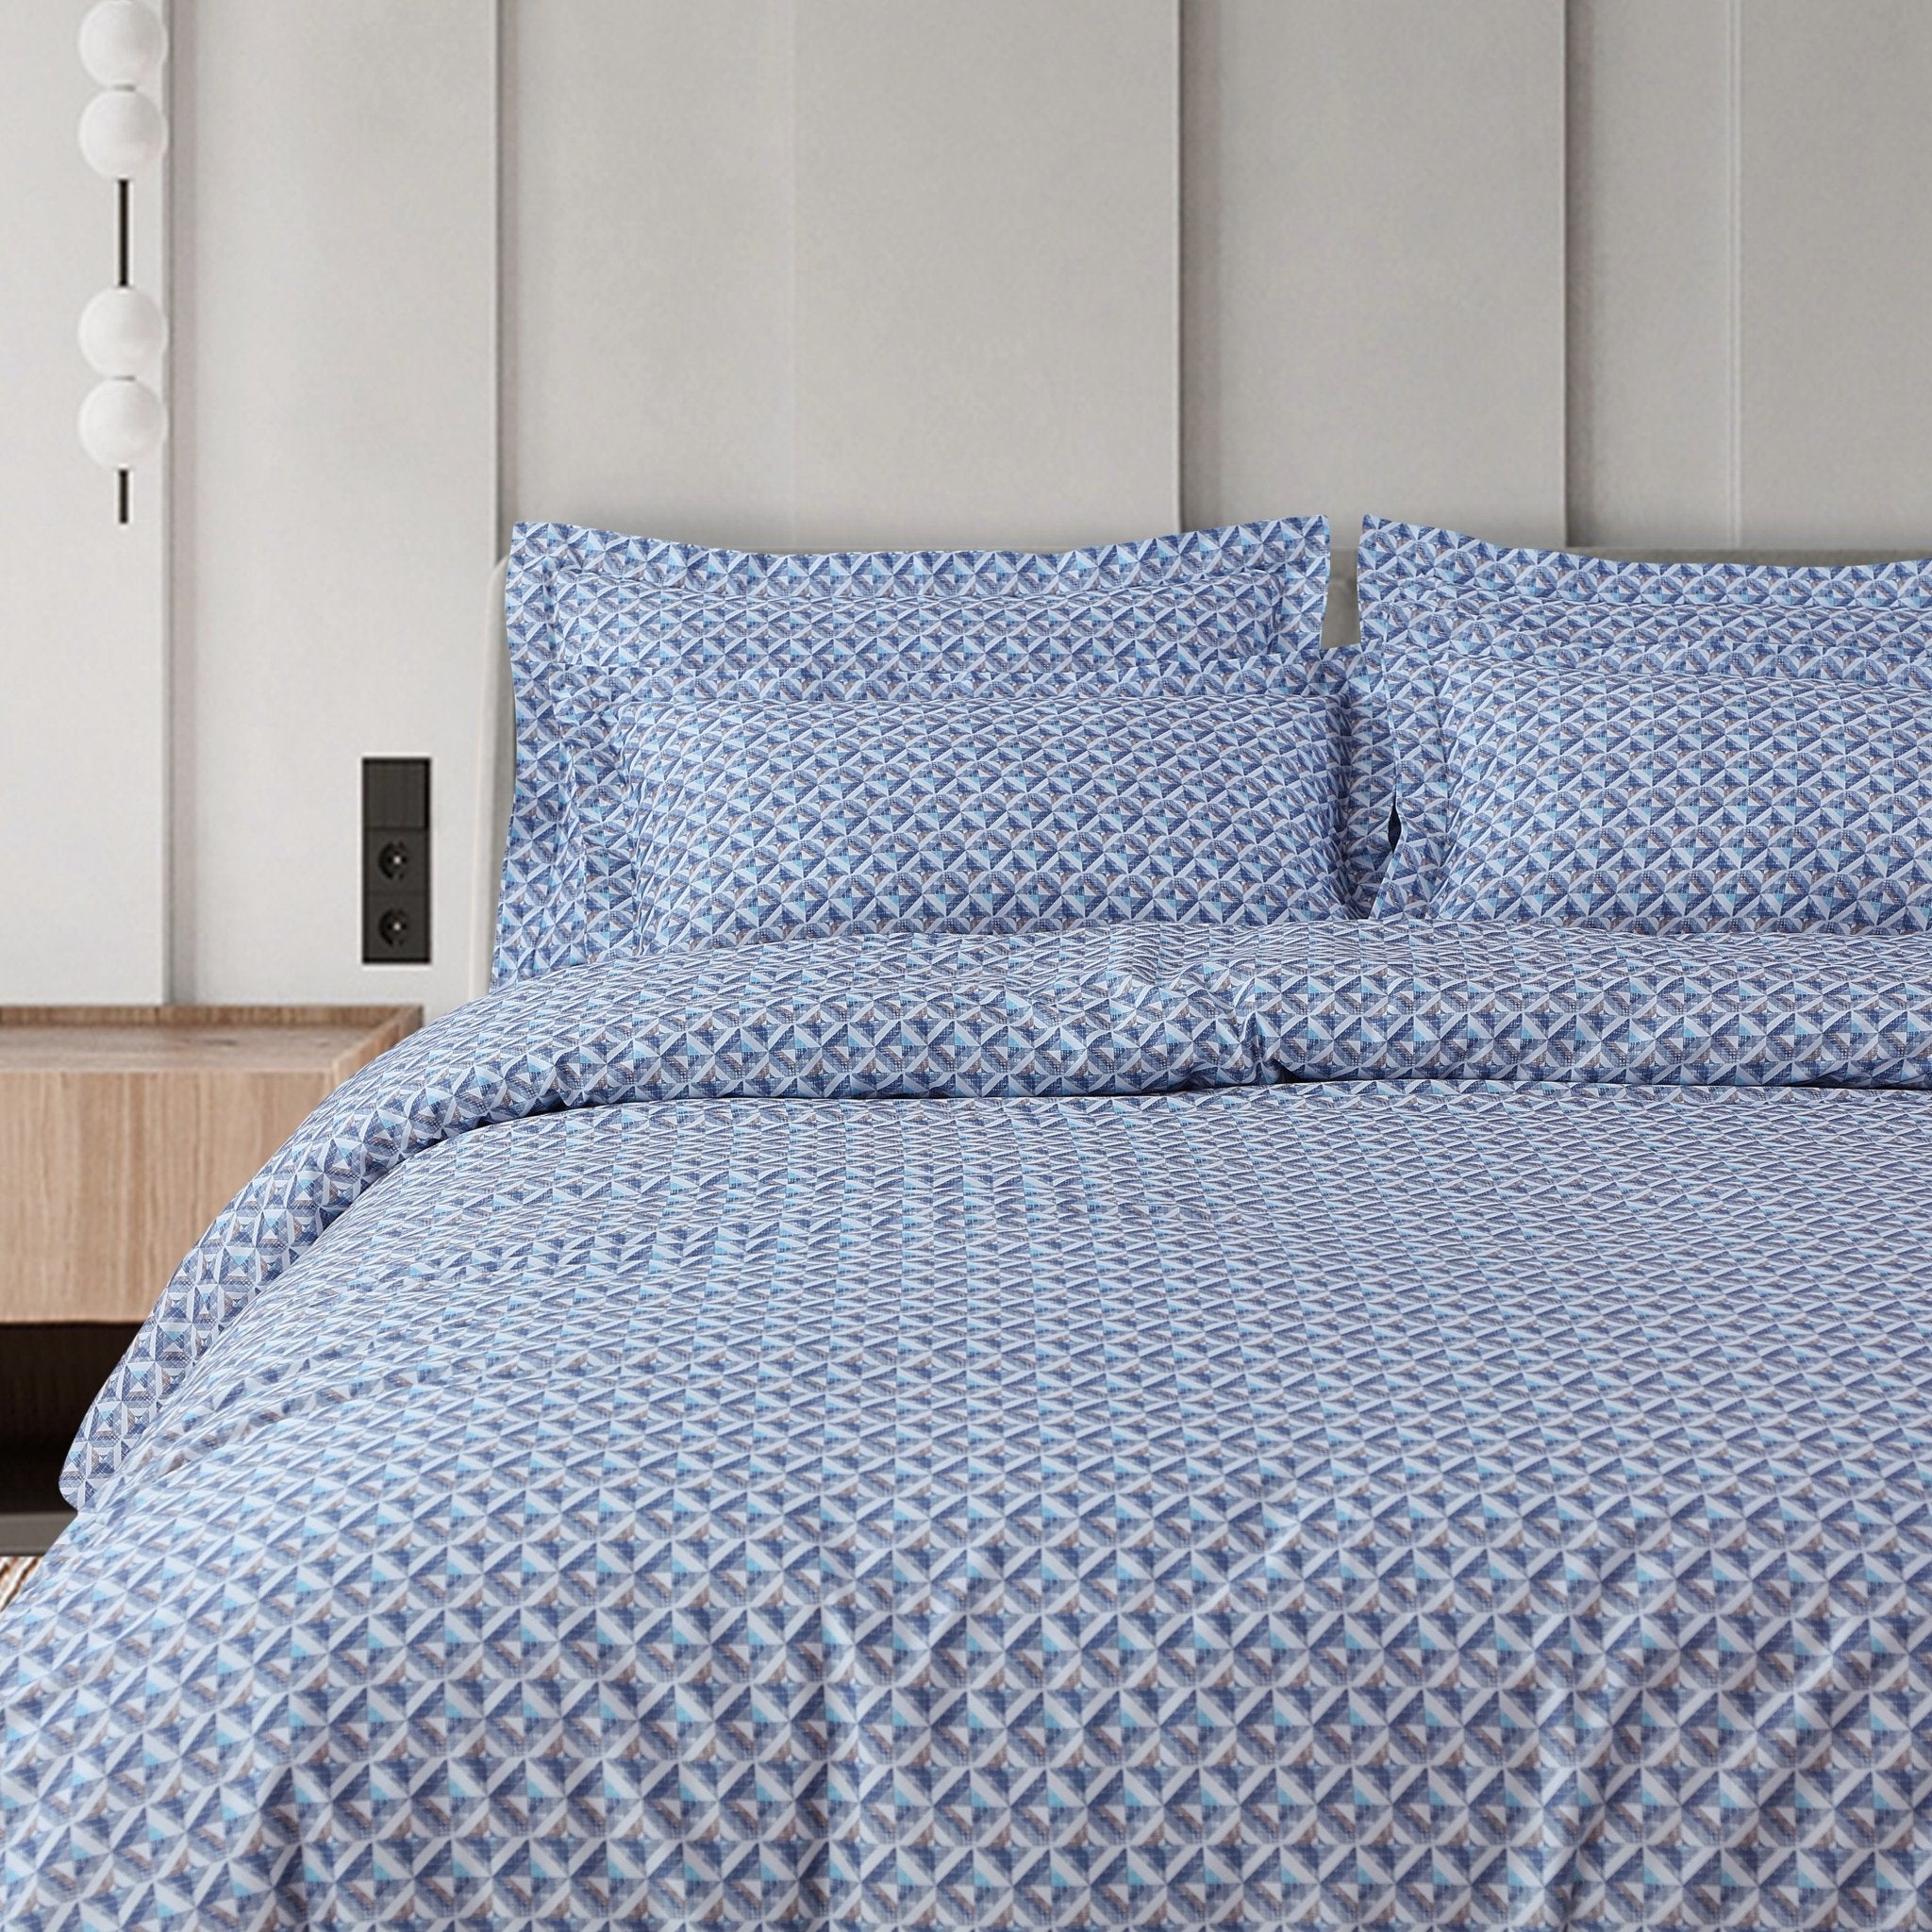 Malako Caèn Blue Abstract 500 TC 100% Cotton King Size Bedsheet/Duvet Cover - MALAKO